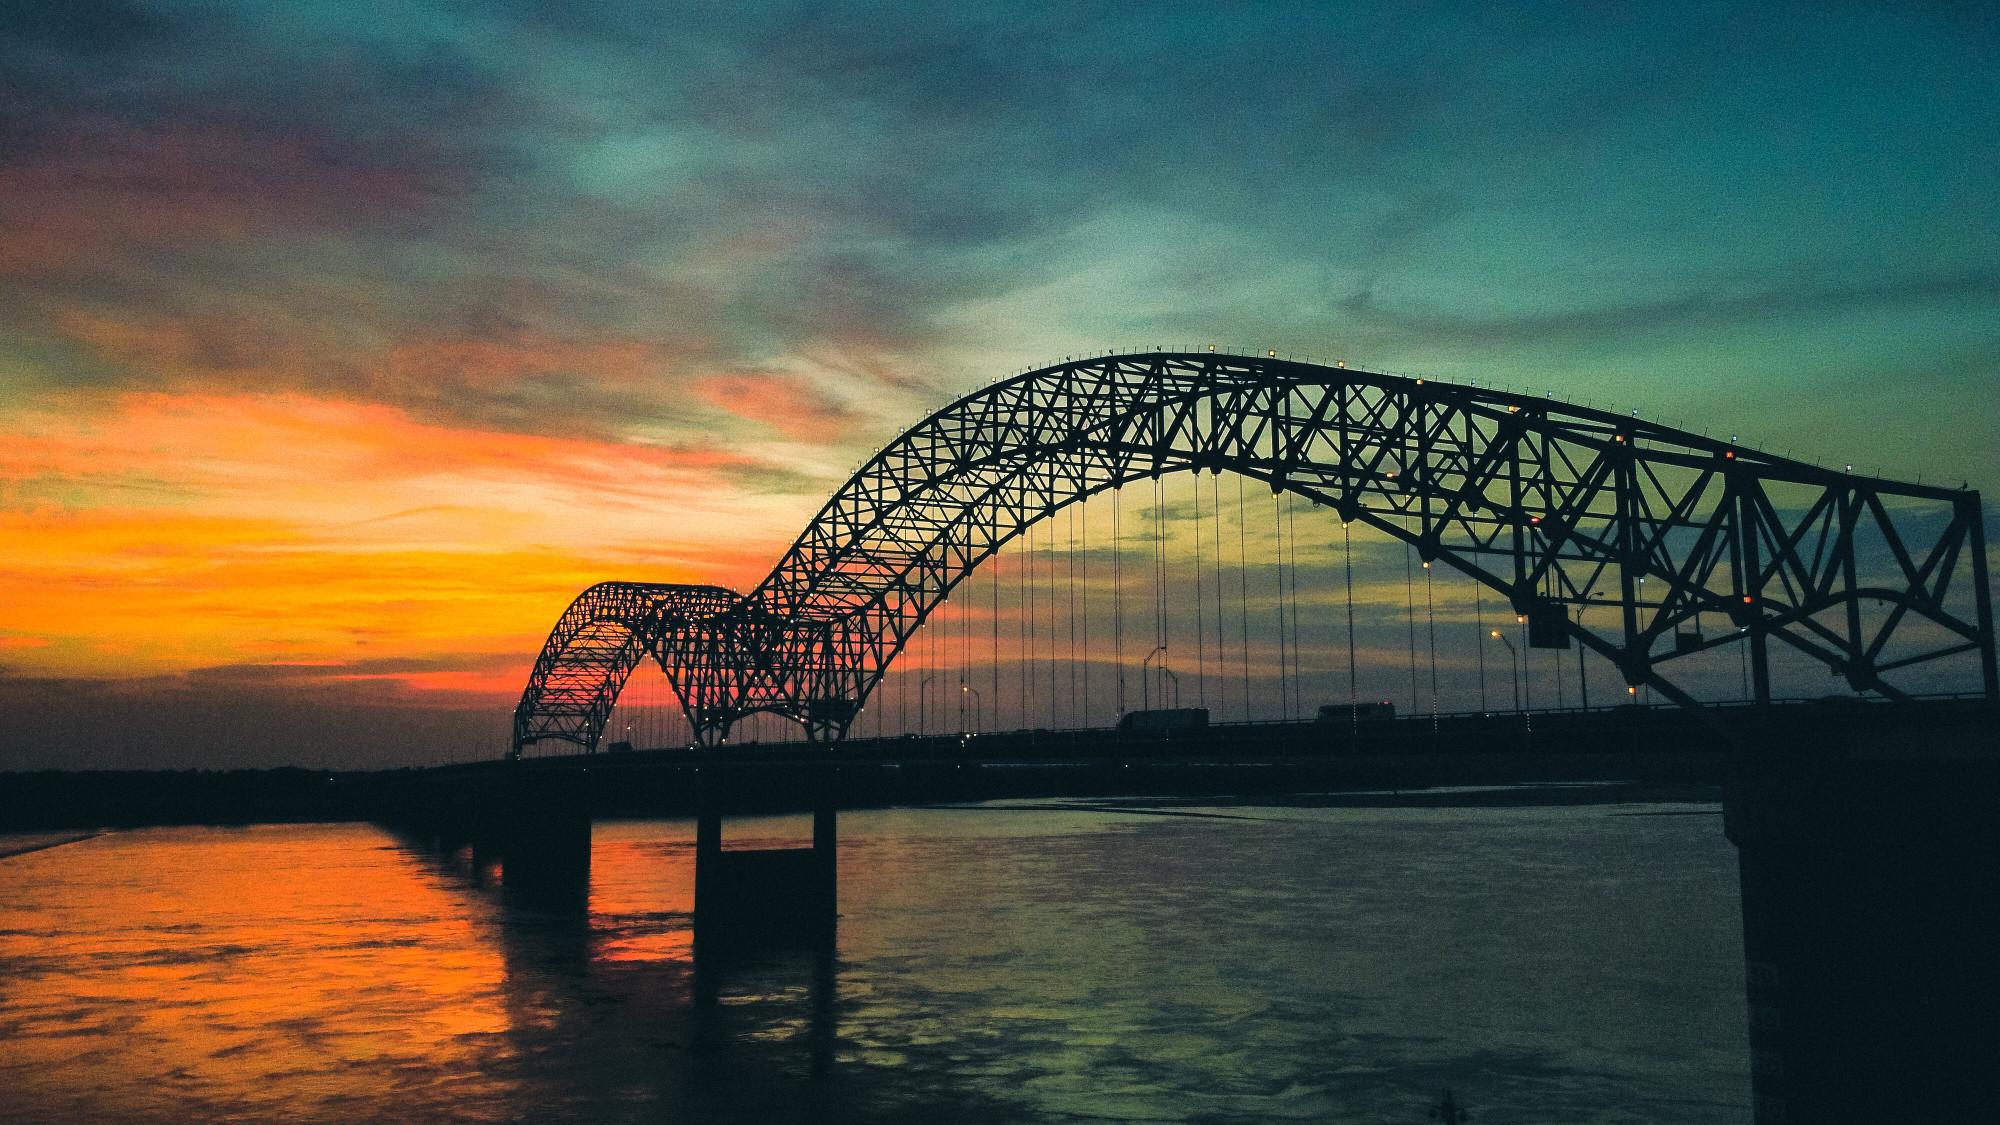 The Memphis I40 bridge at sunset.